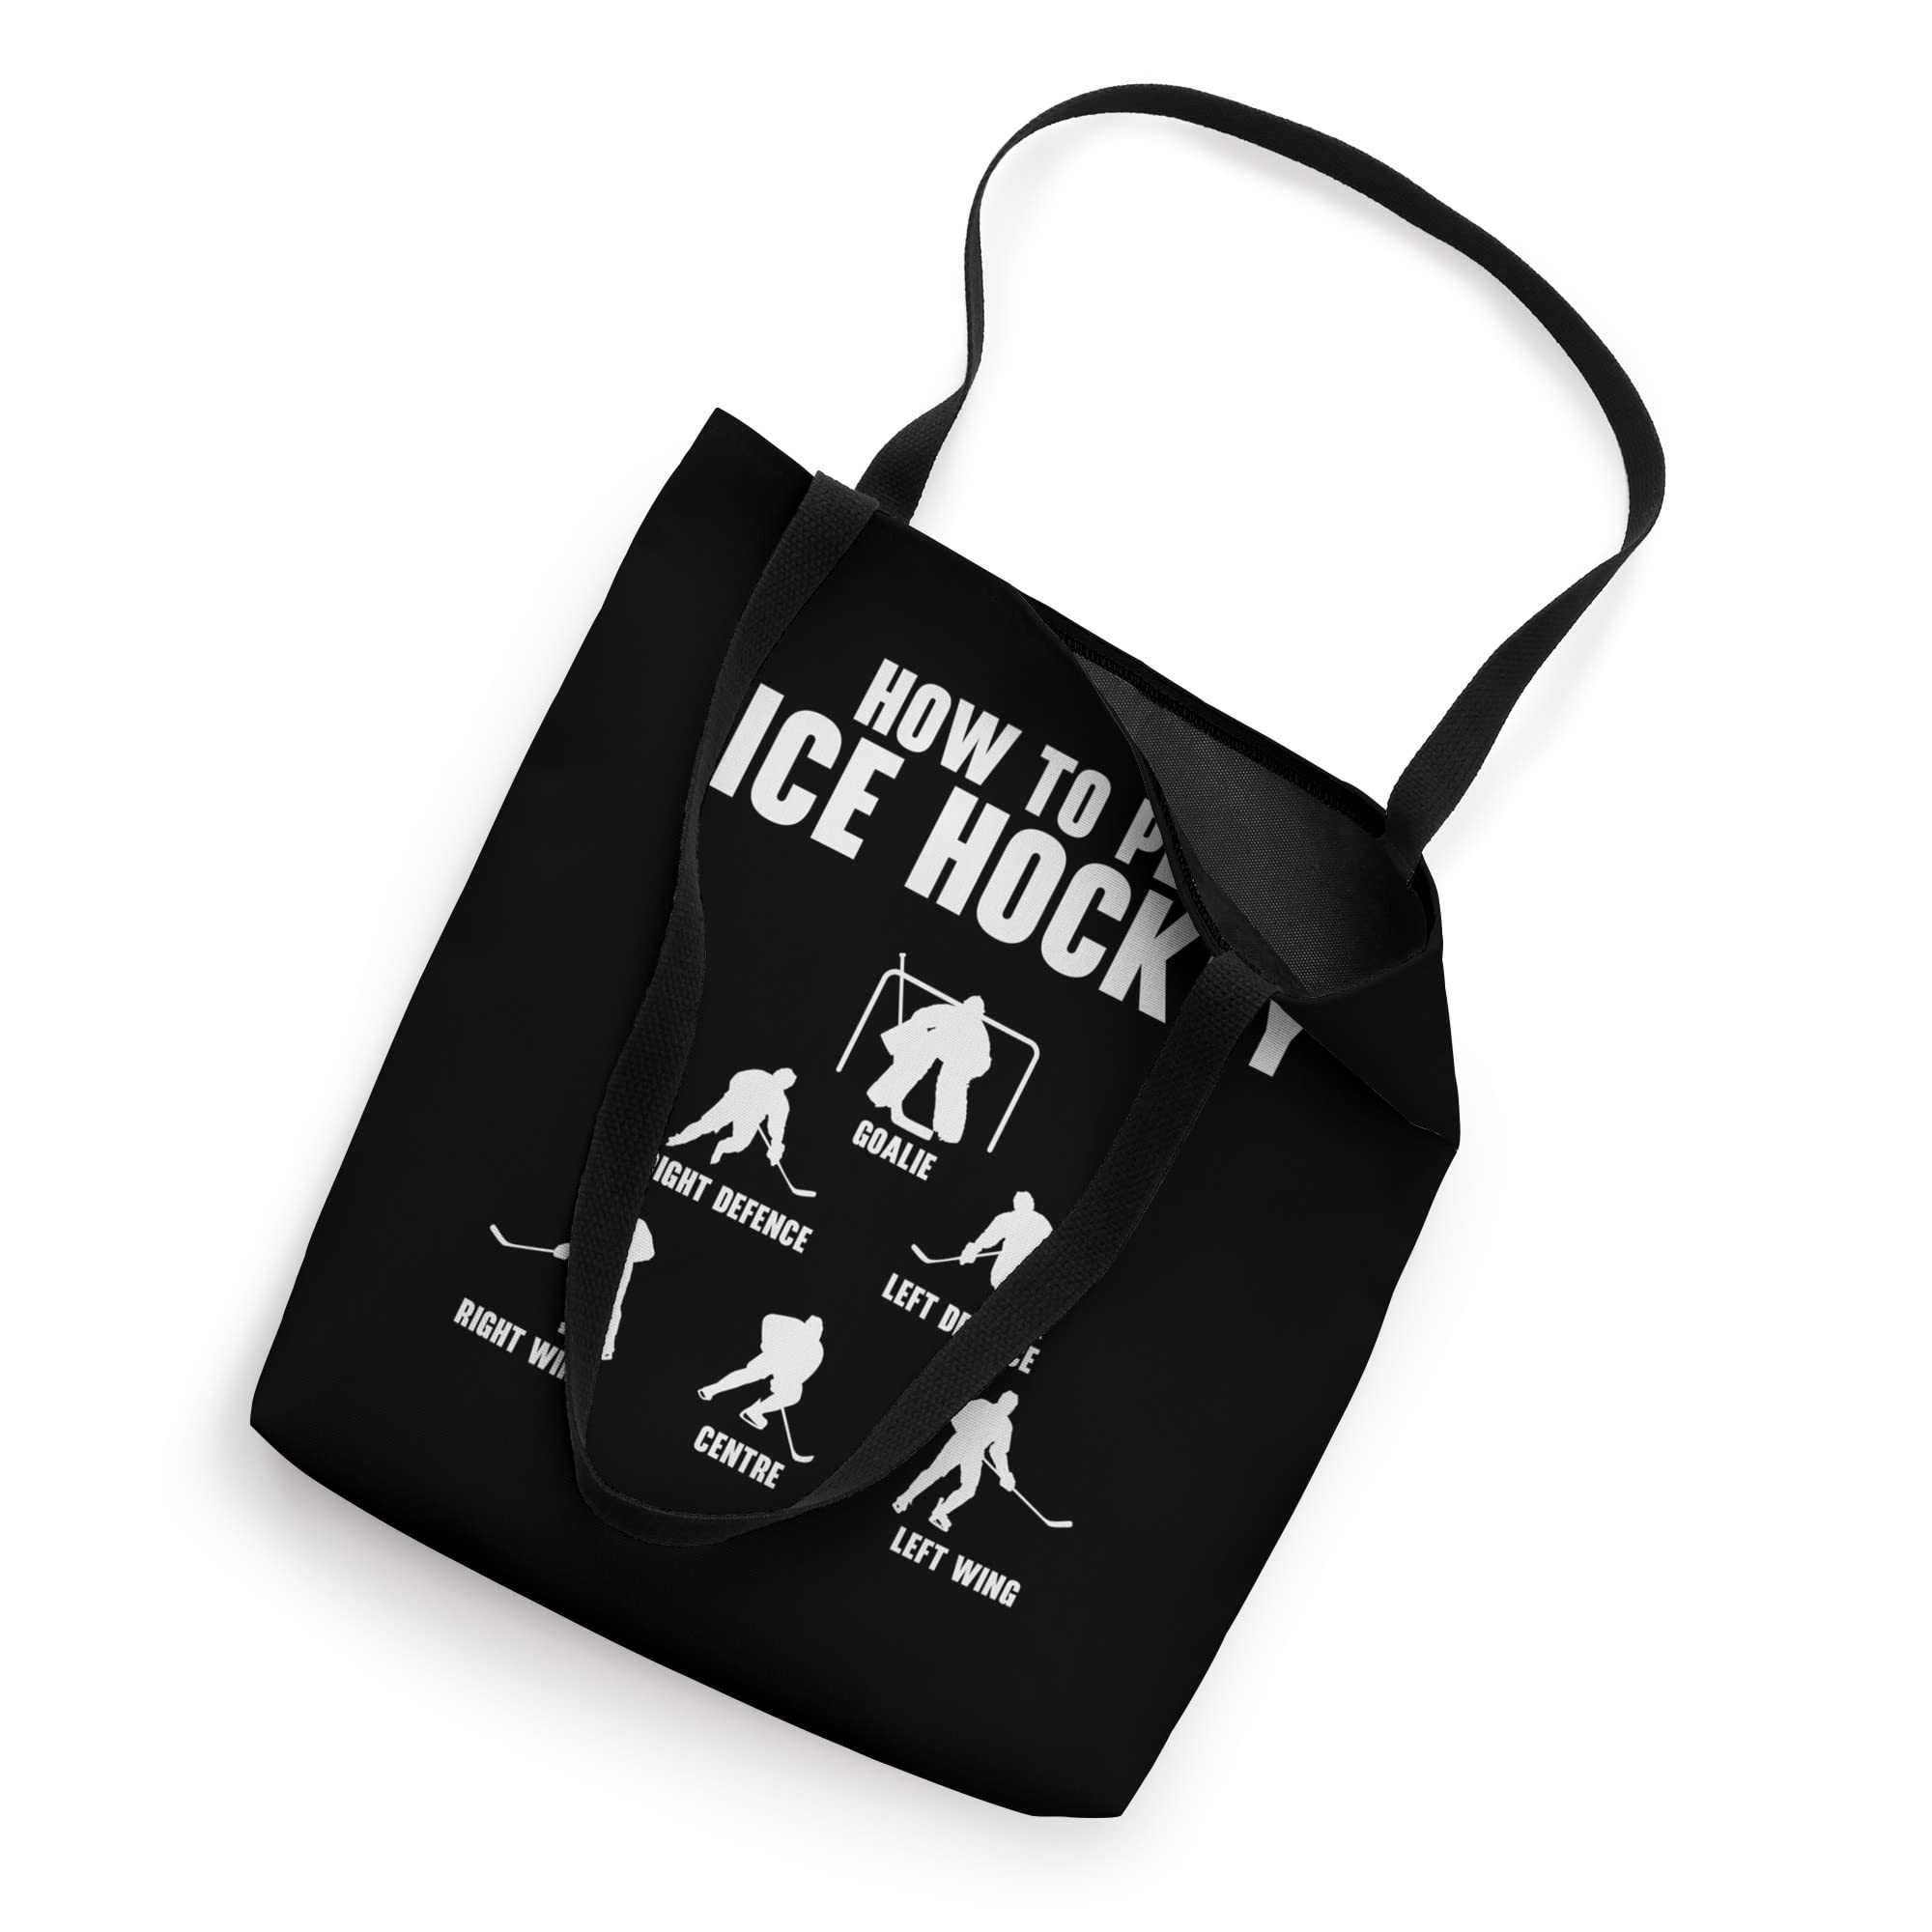 How to Play Ice Hockey Ice Hockey Training Player Coach Tote Bag